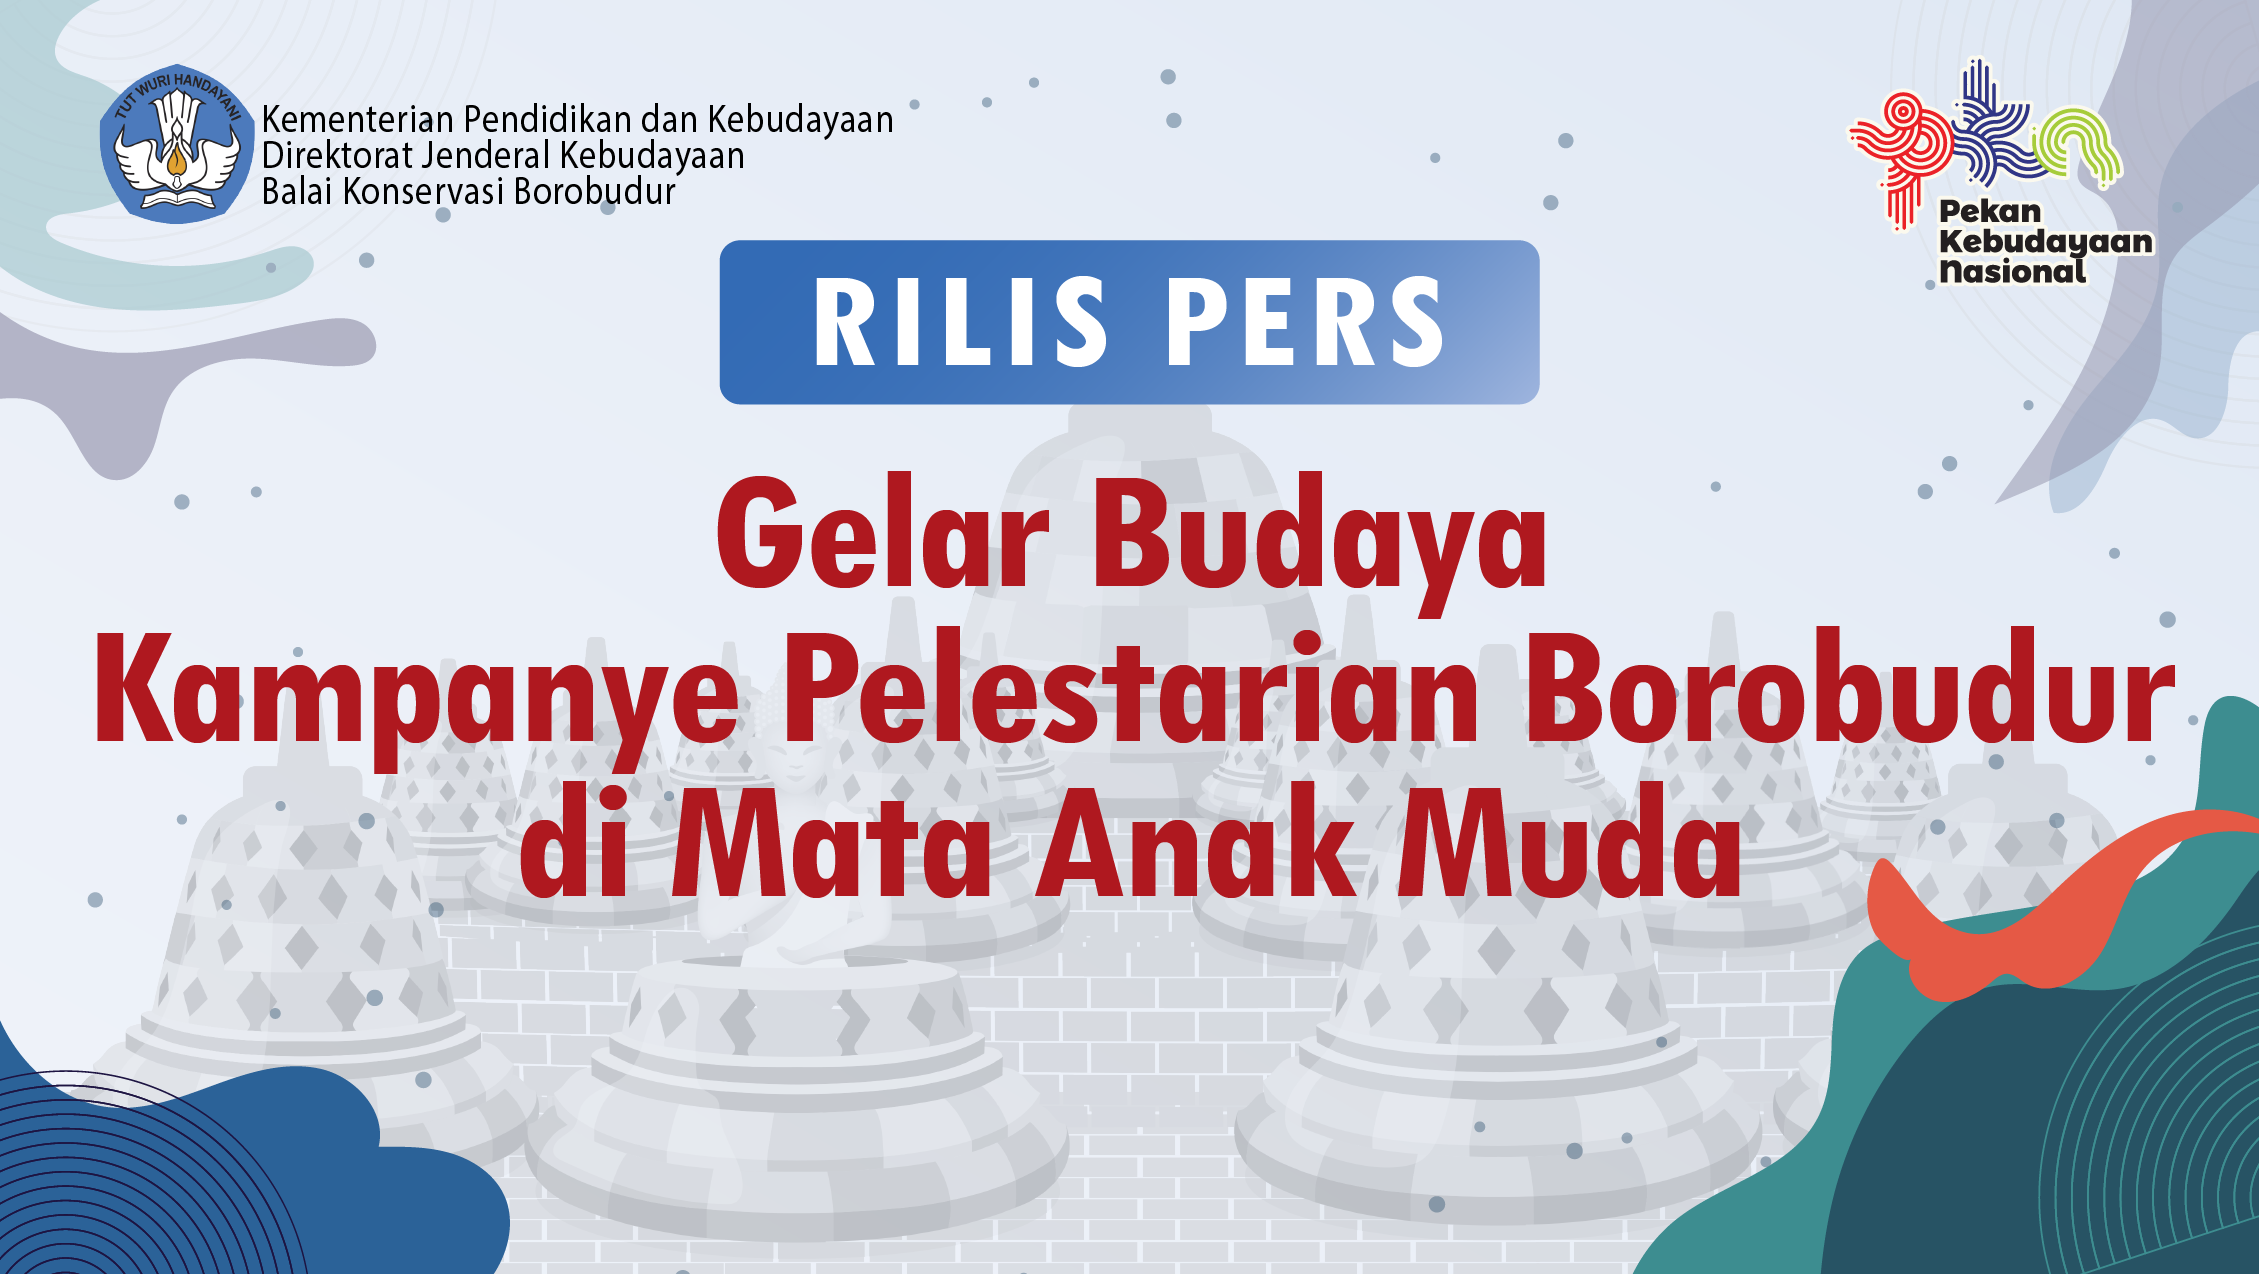 You are currently viewing Rilis Pers; Gelar Budaya Kampanye Pelestarian